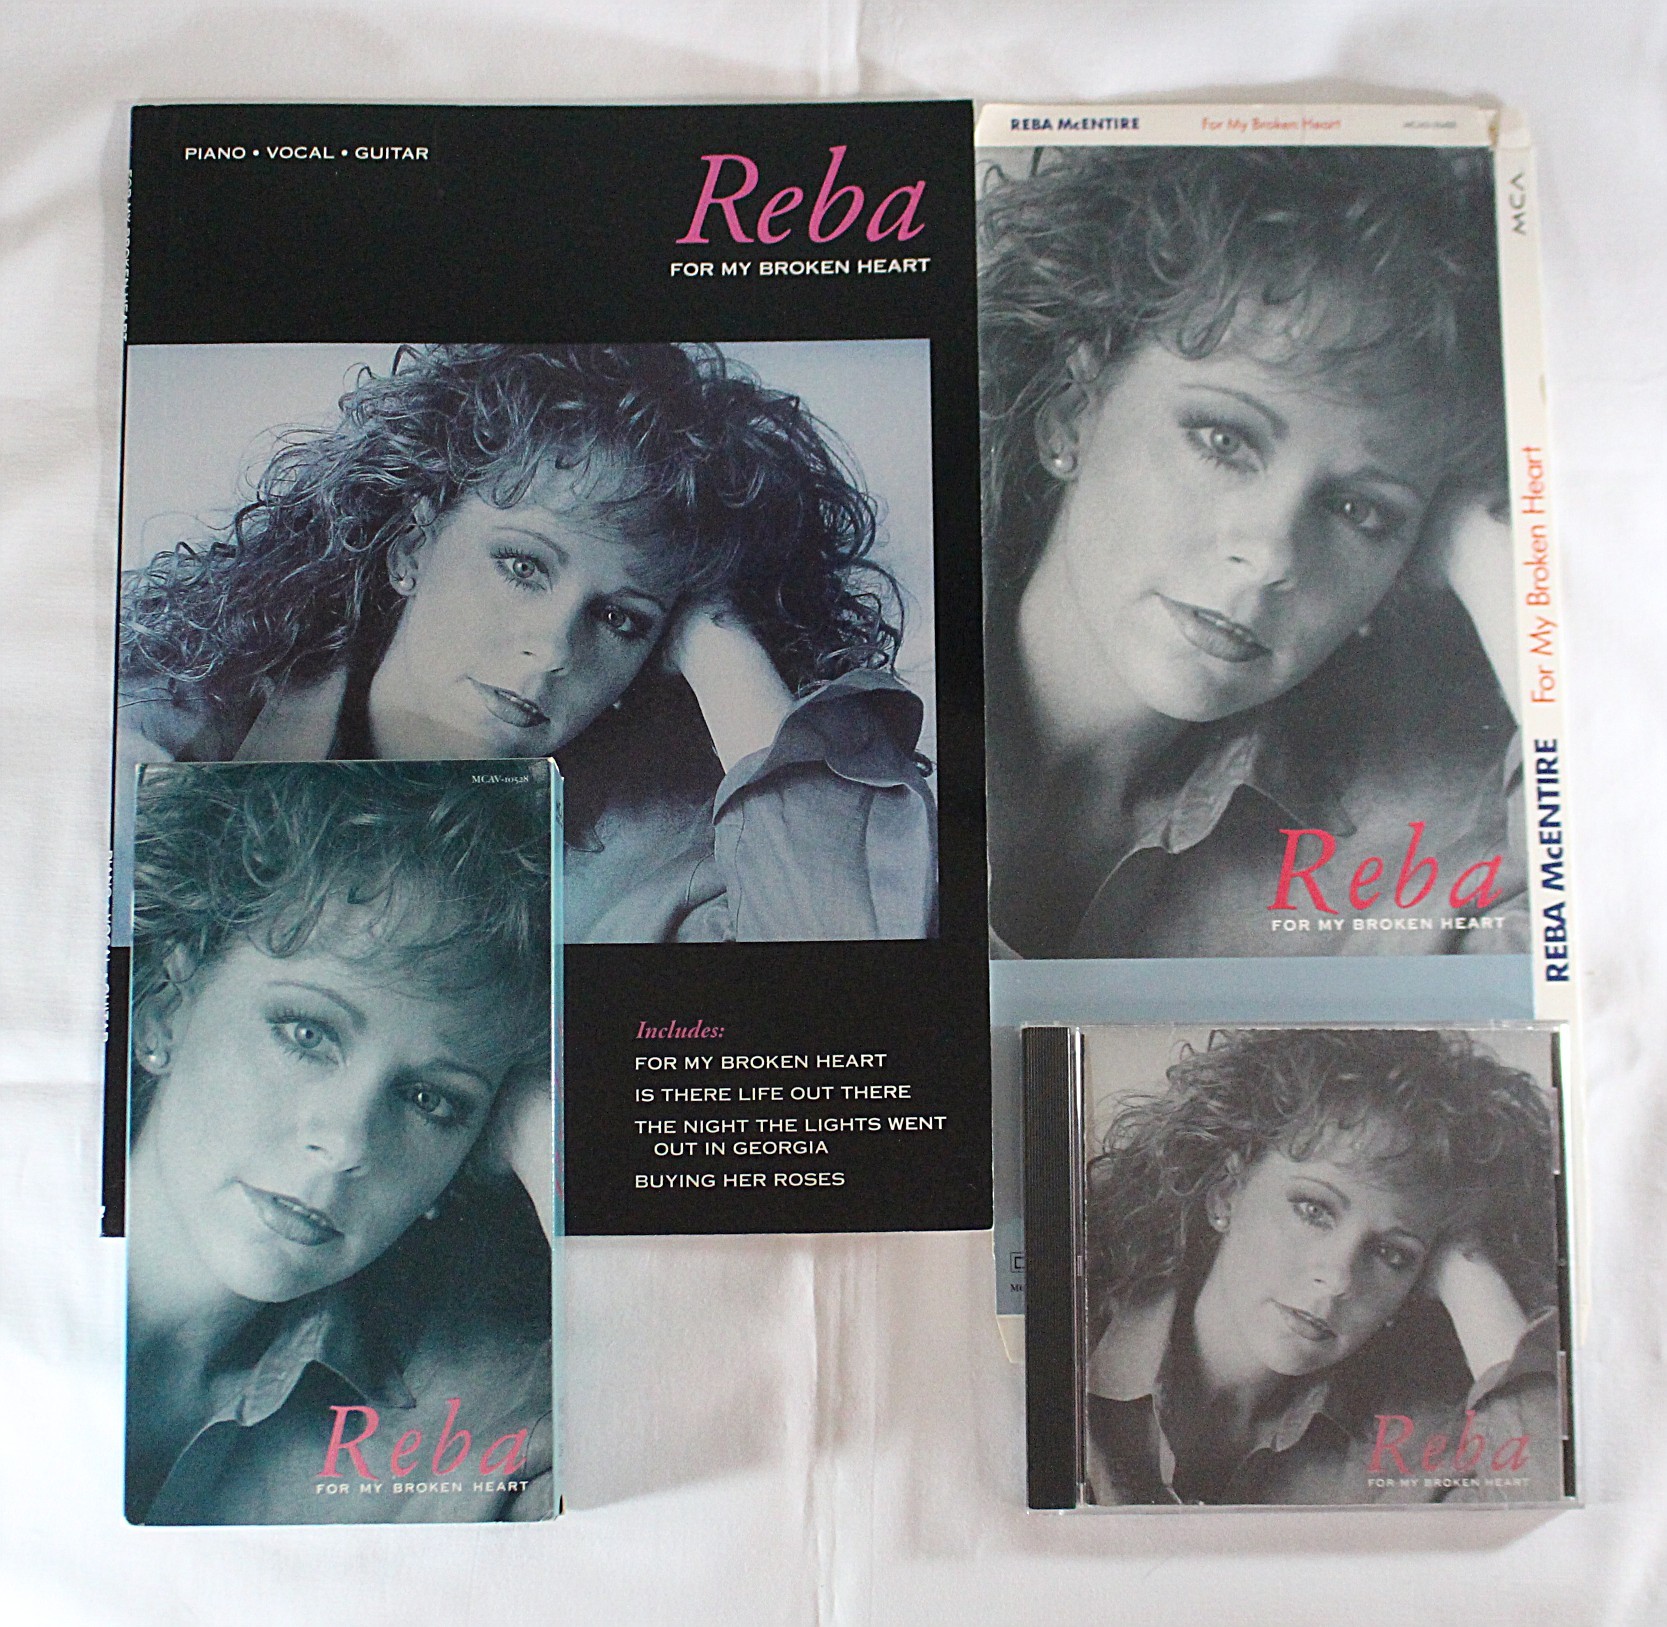 Reba McEntire - Ultimate Fan Pack “For My Broken Heart” album 